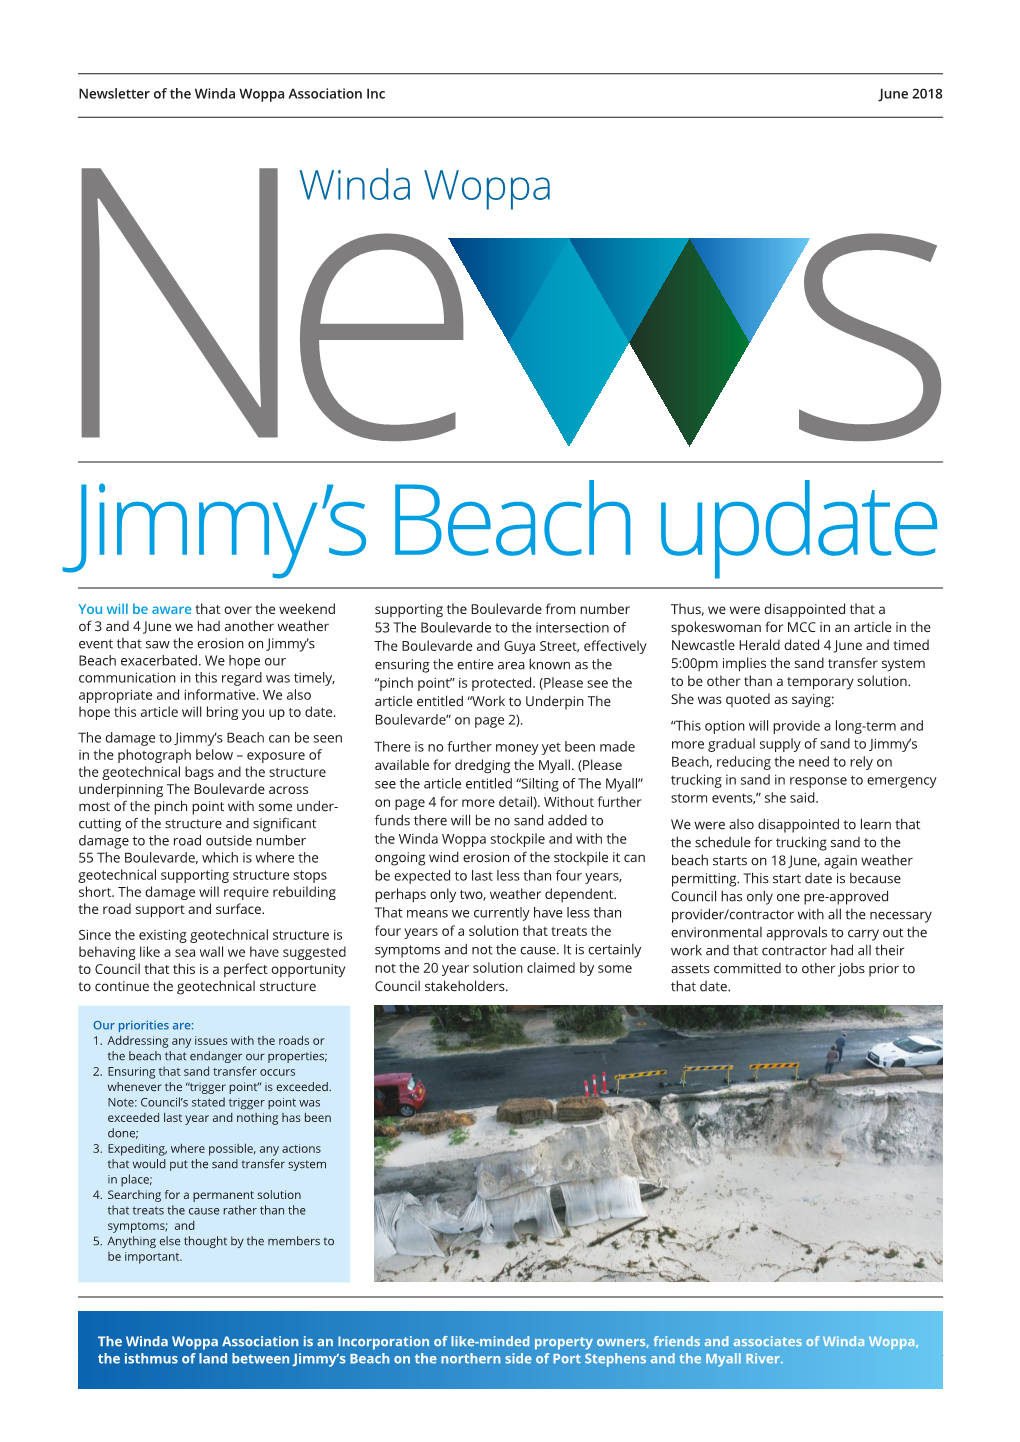 Jimmy's Beach Update